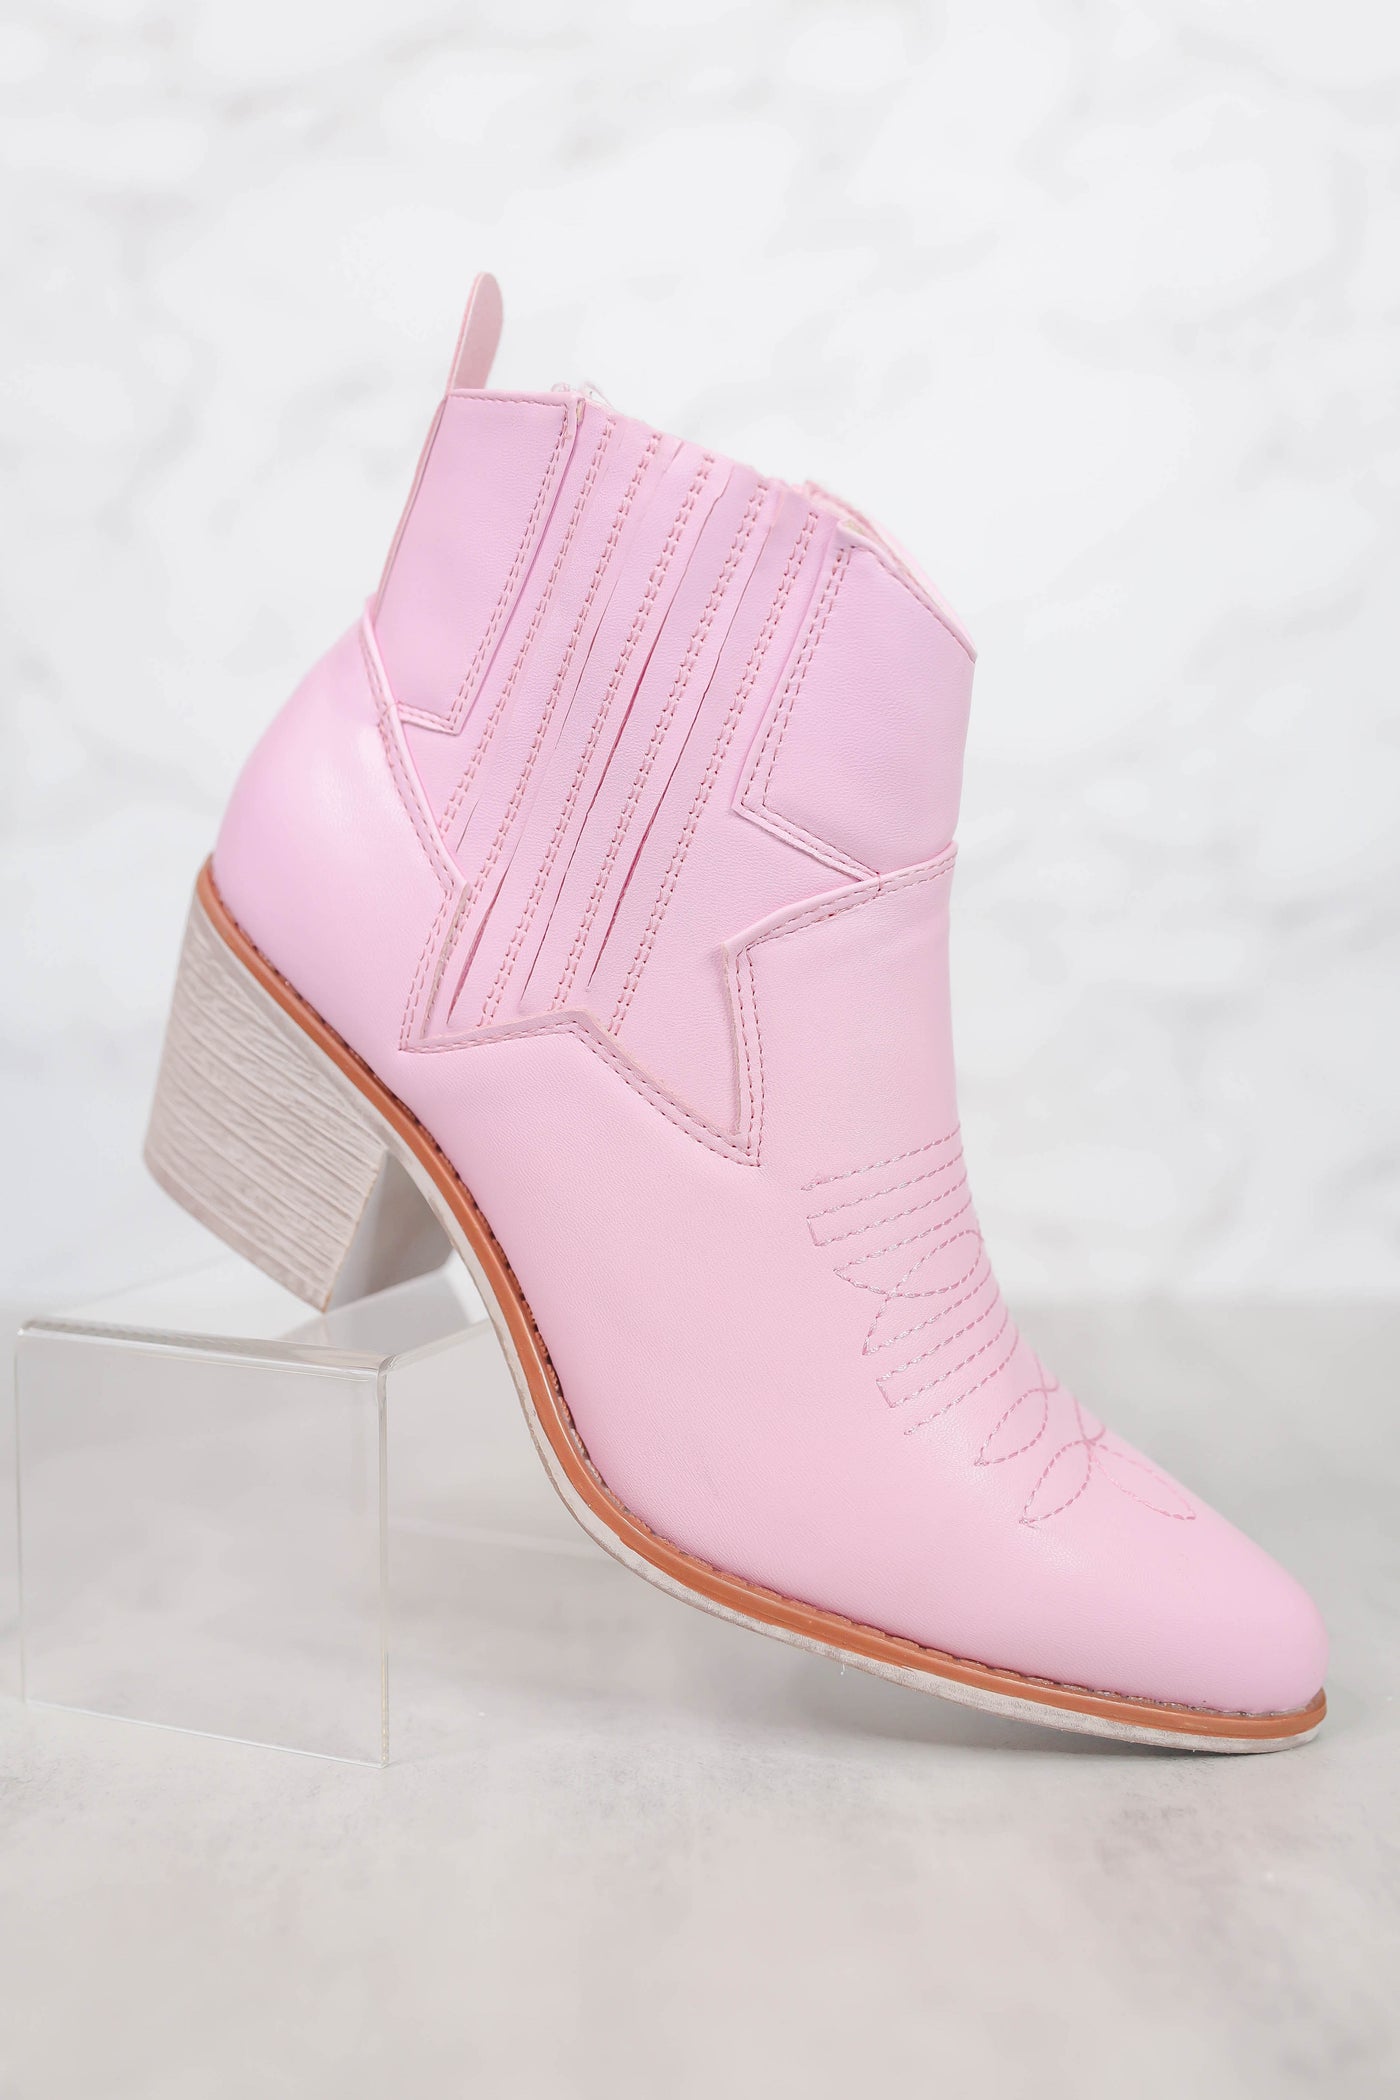 Blush Pink Women's Booties- Pink Western Booties- Pink Short Boots